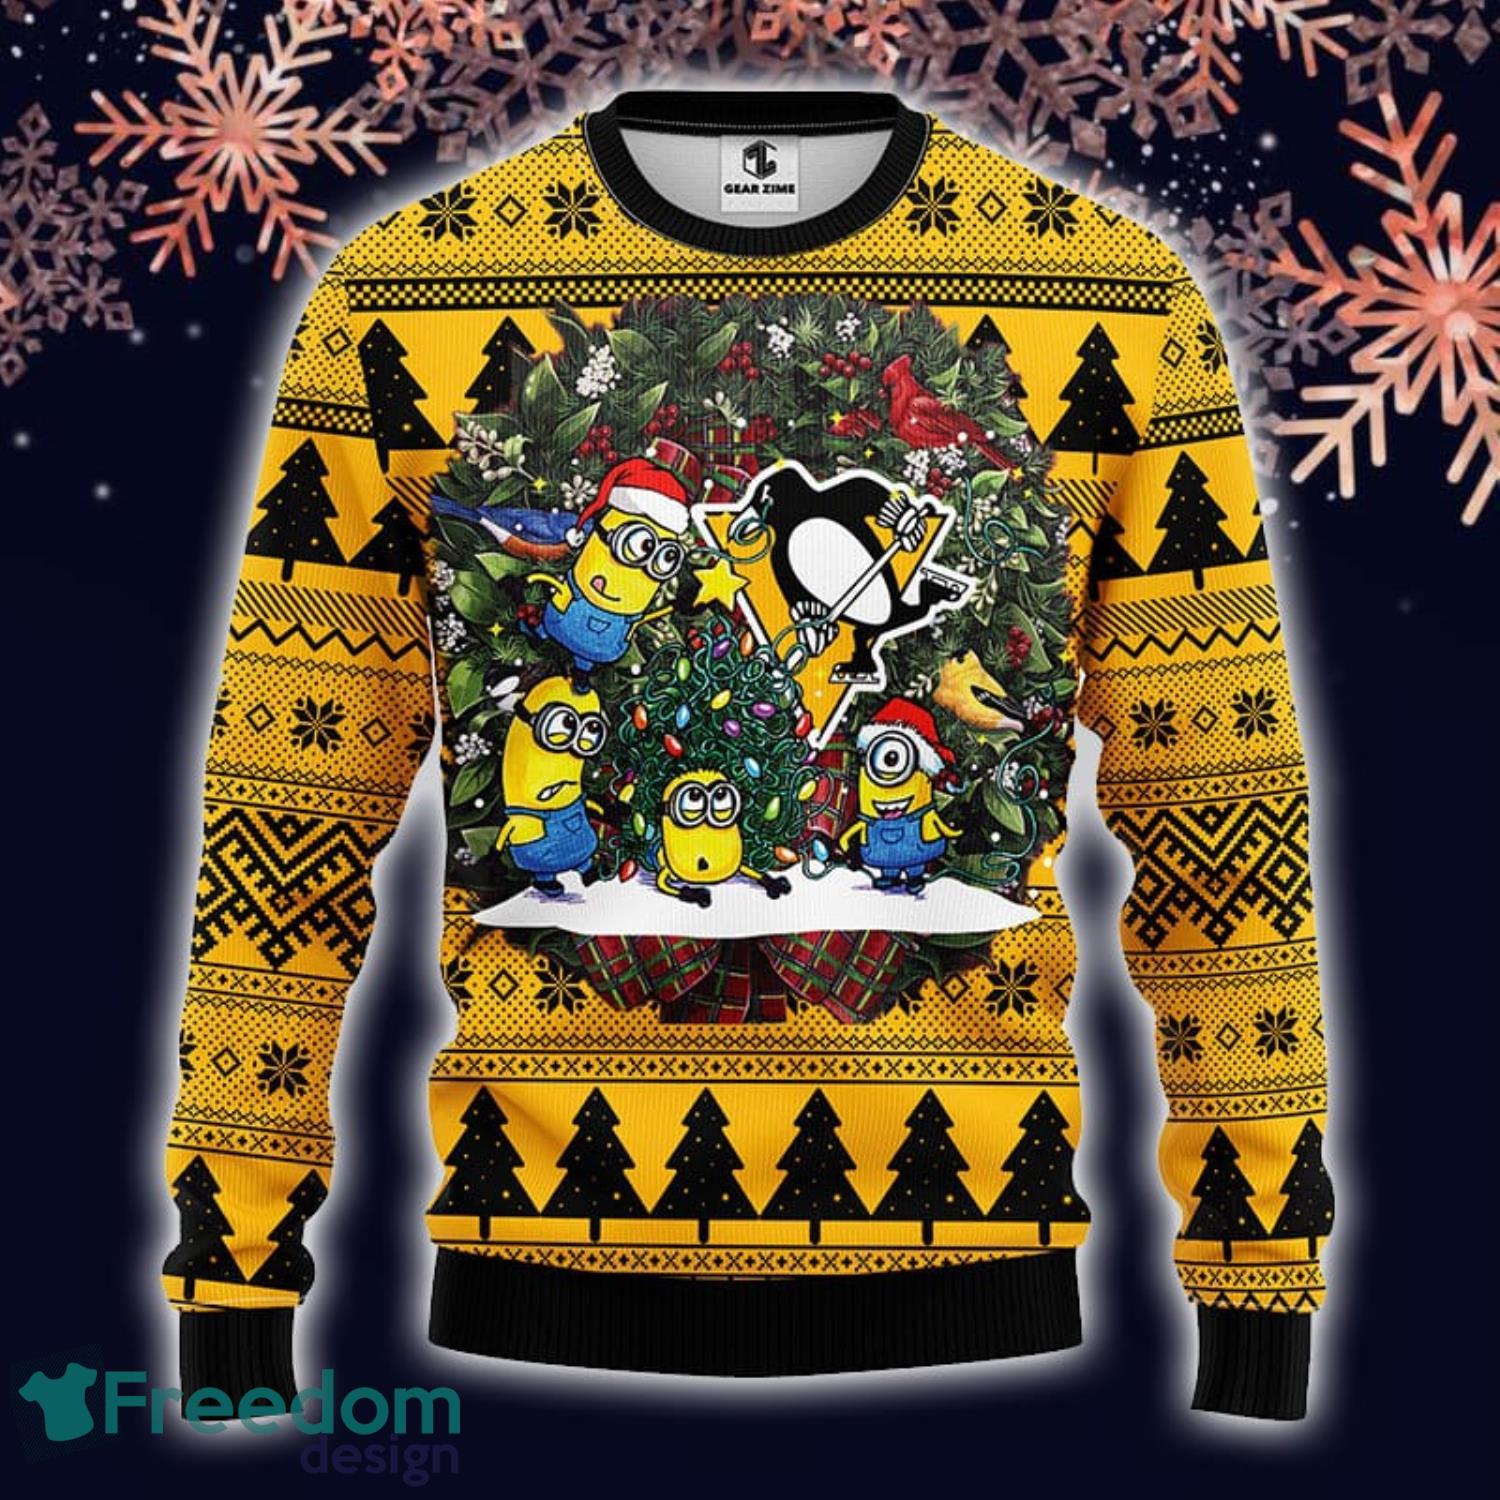 Fremsyn kirurg Efterforskning NHL Pittsburgh Penguins Funny Minion Ugly Christmas Sweater For Fans -  Freedomdesign